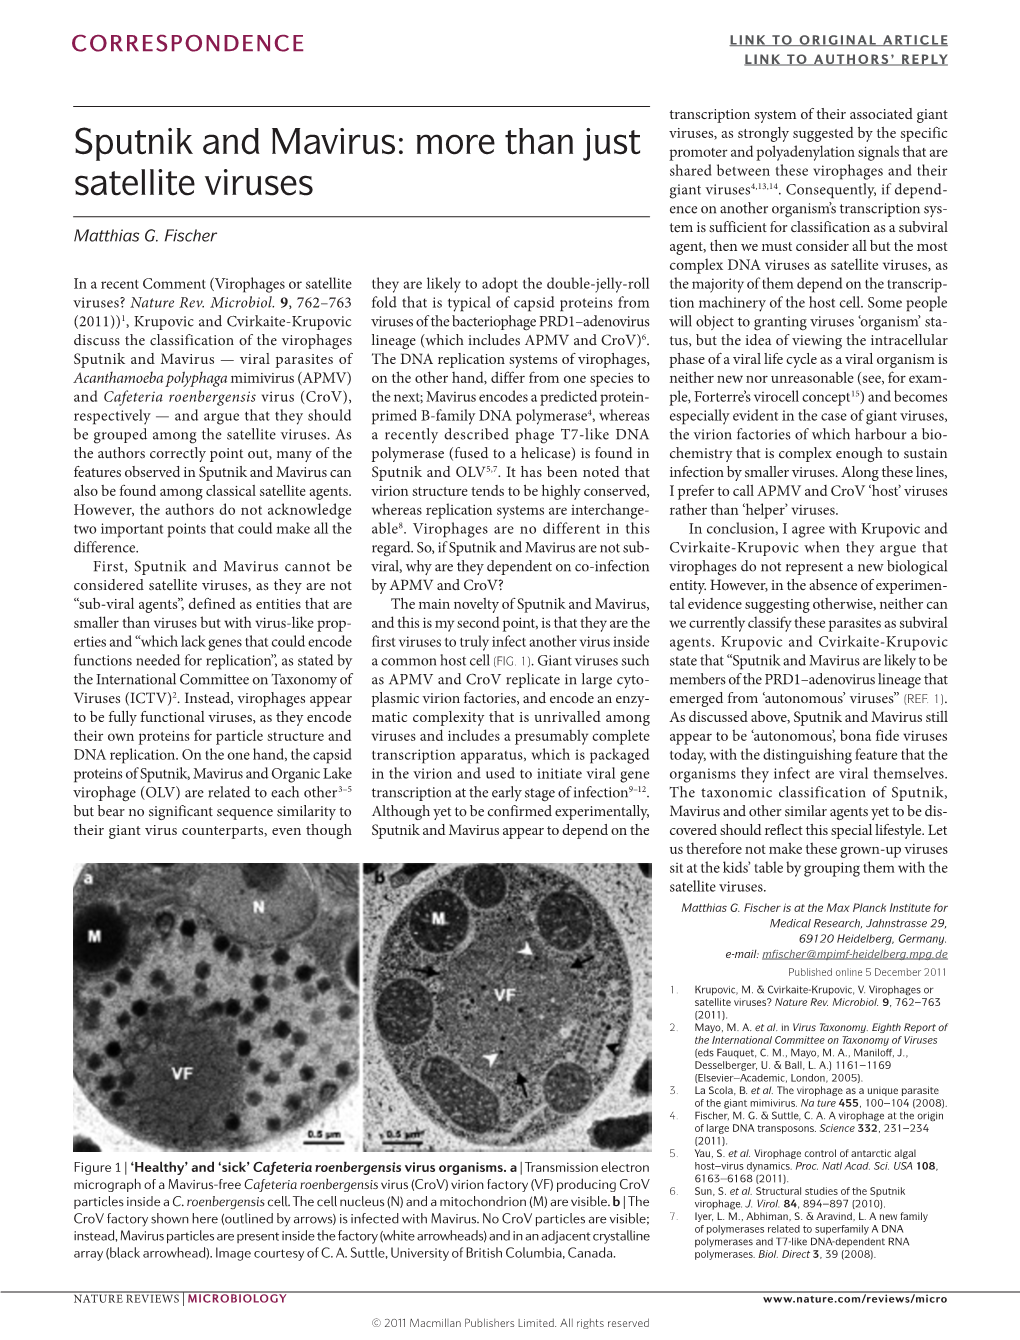 Sputnik and Mavirus: More Than Just Satellite Viruses